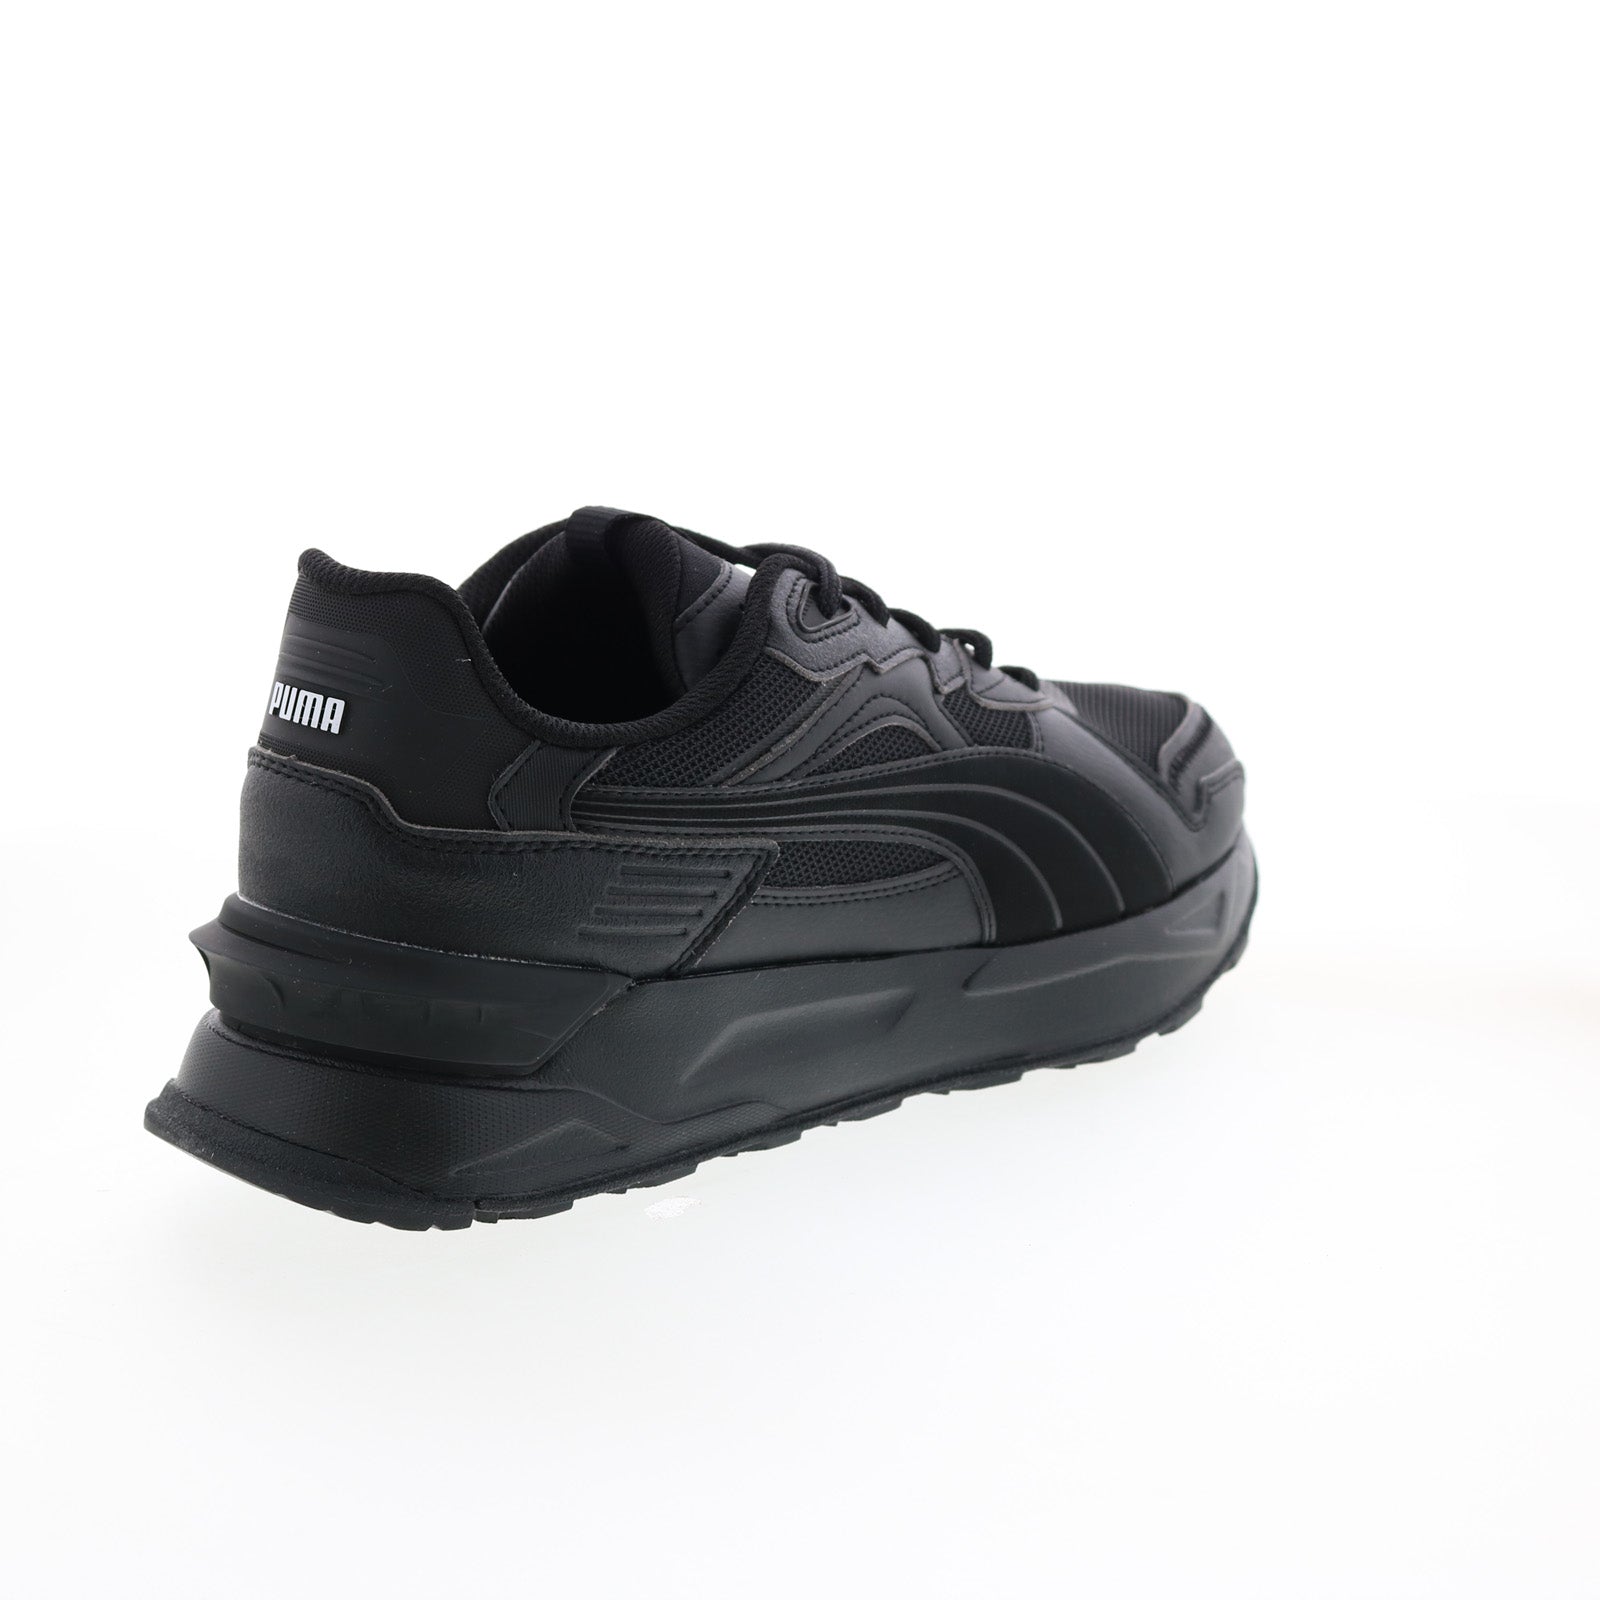 Shoes Puma Mirage Sport - Puma - Men's Sneakers - Lifestyle